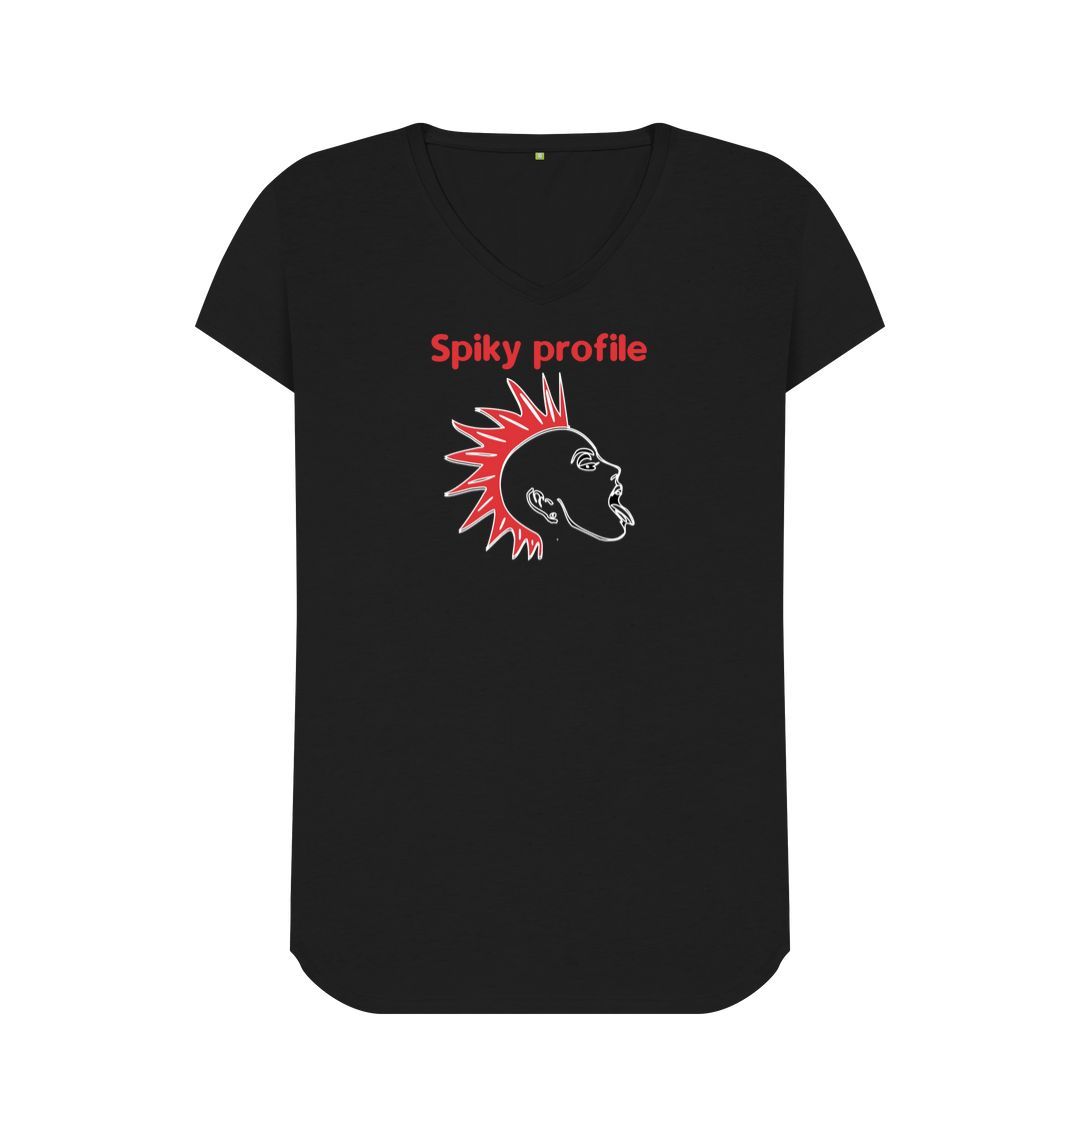 Black Spiky profile womens fit V-neck T-shirt